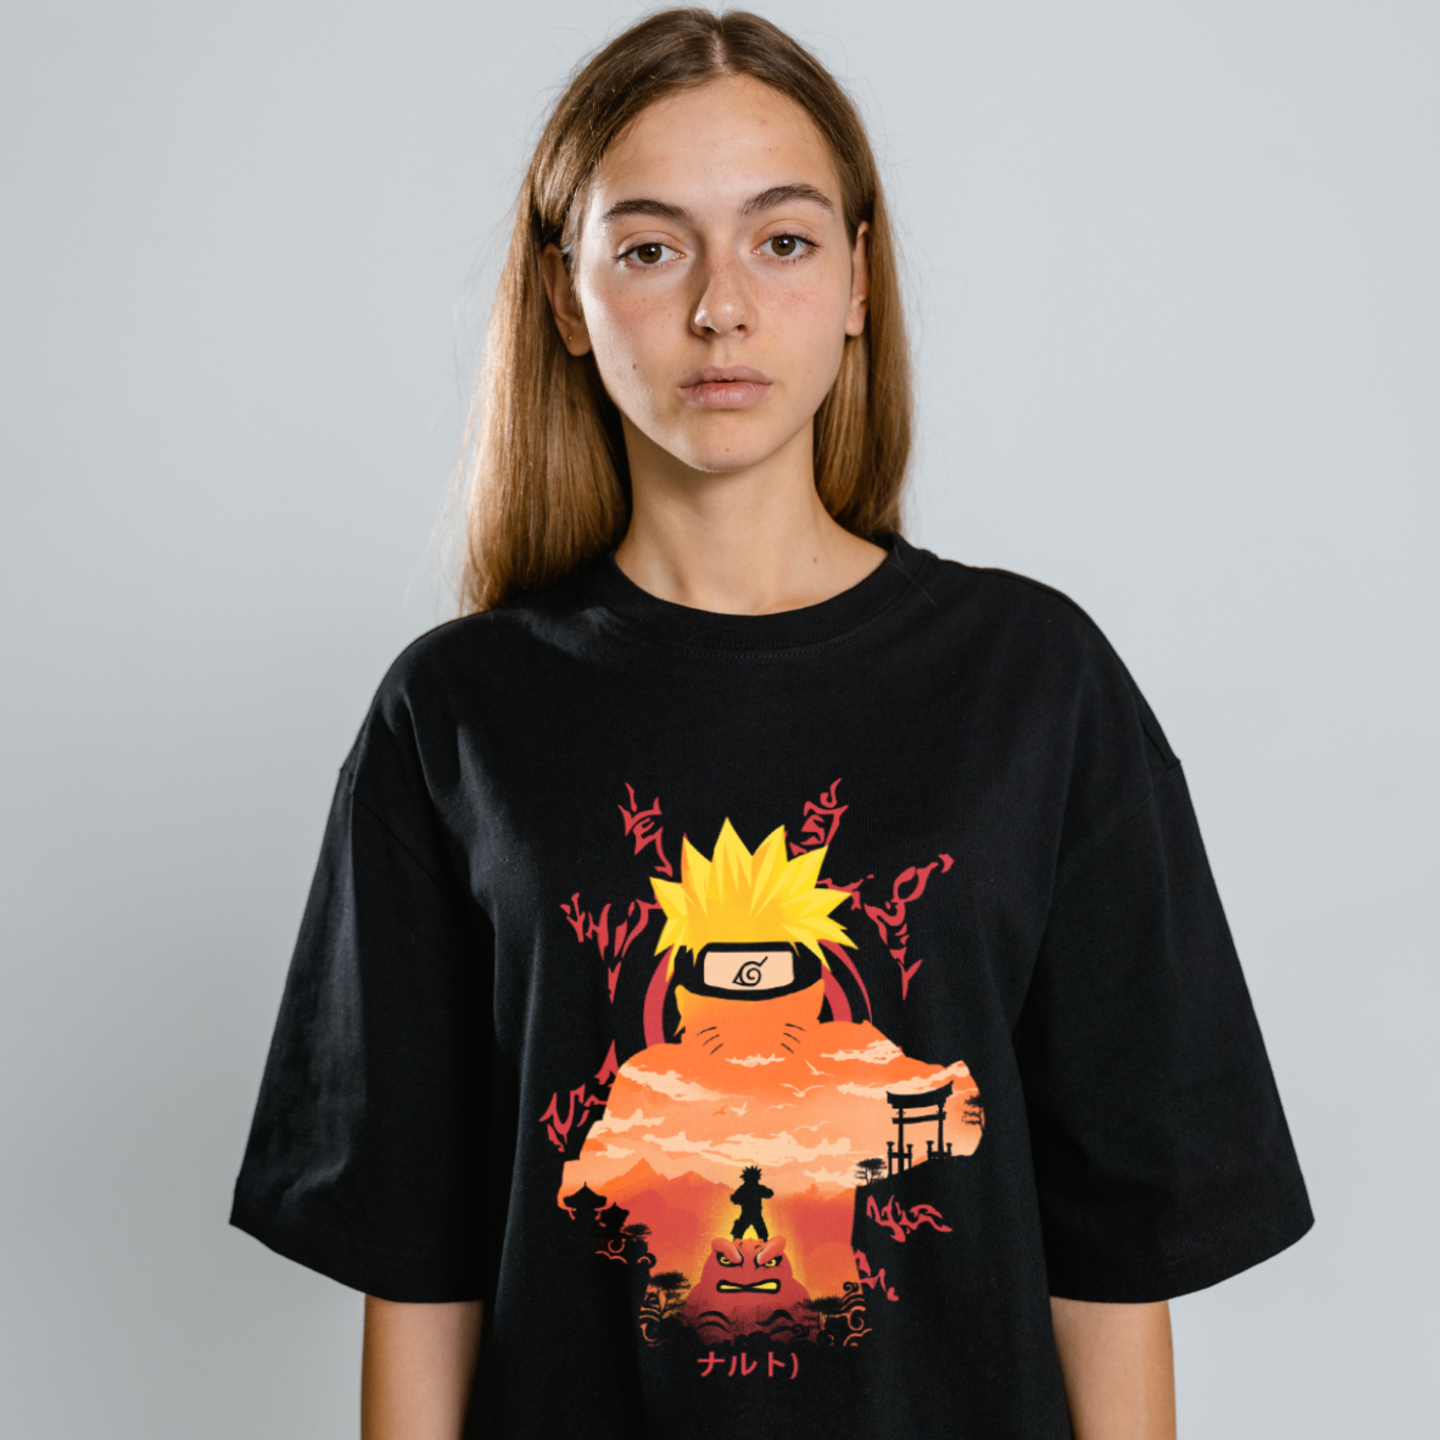 Naruto Sunset Printed T-Shirt